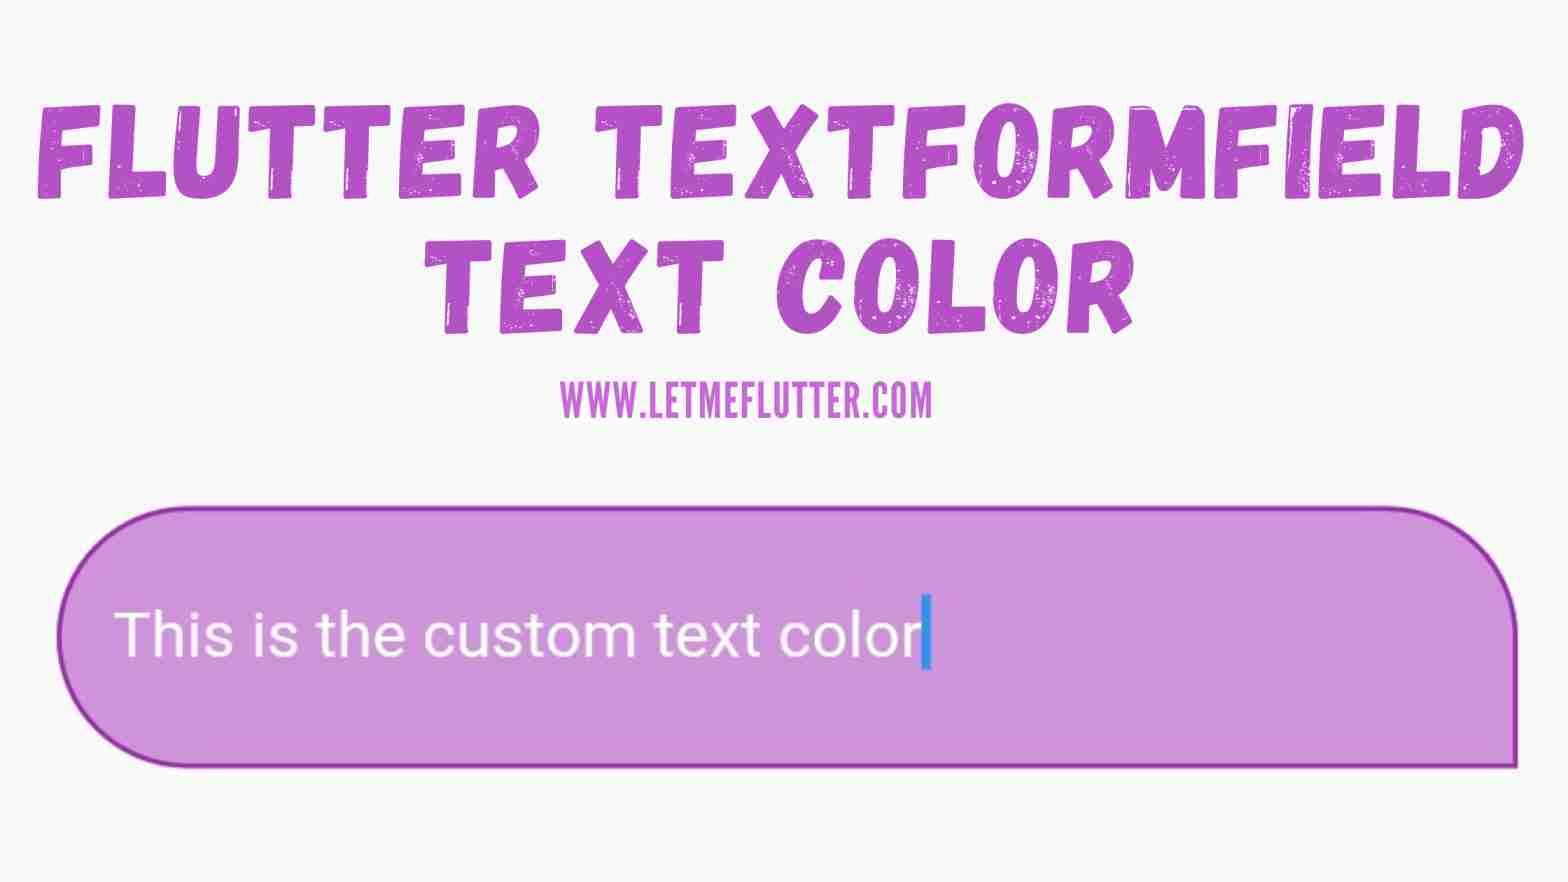 flutter textformfield text color